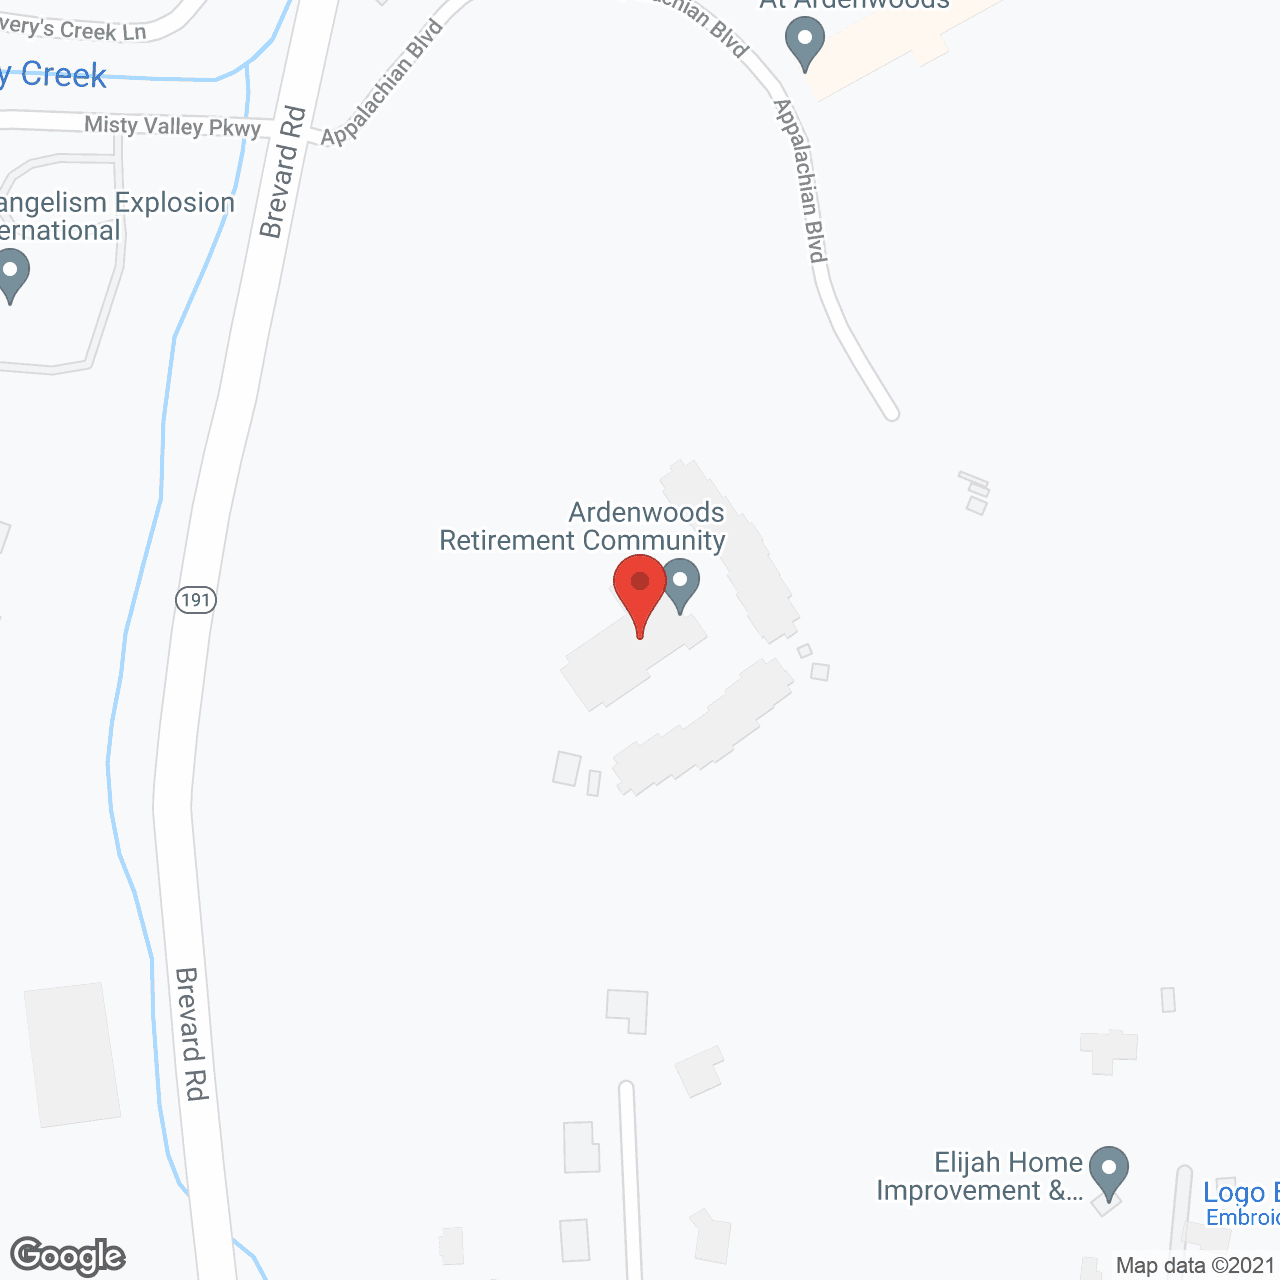 Ardenwoods in google map